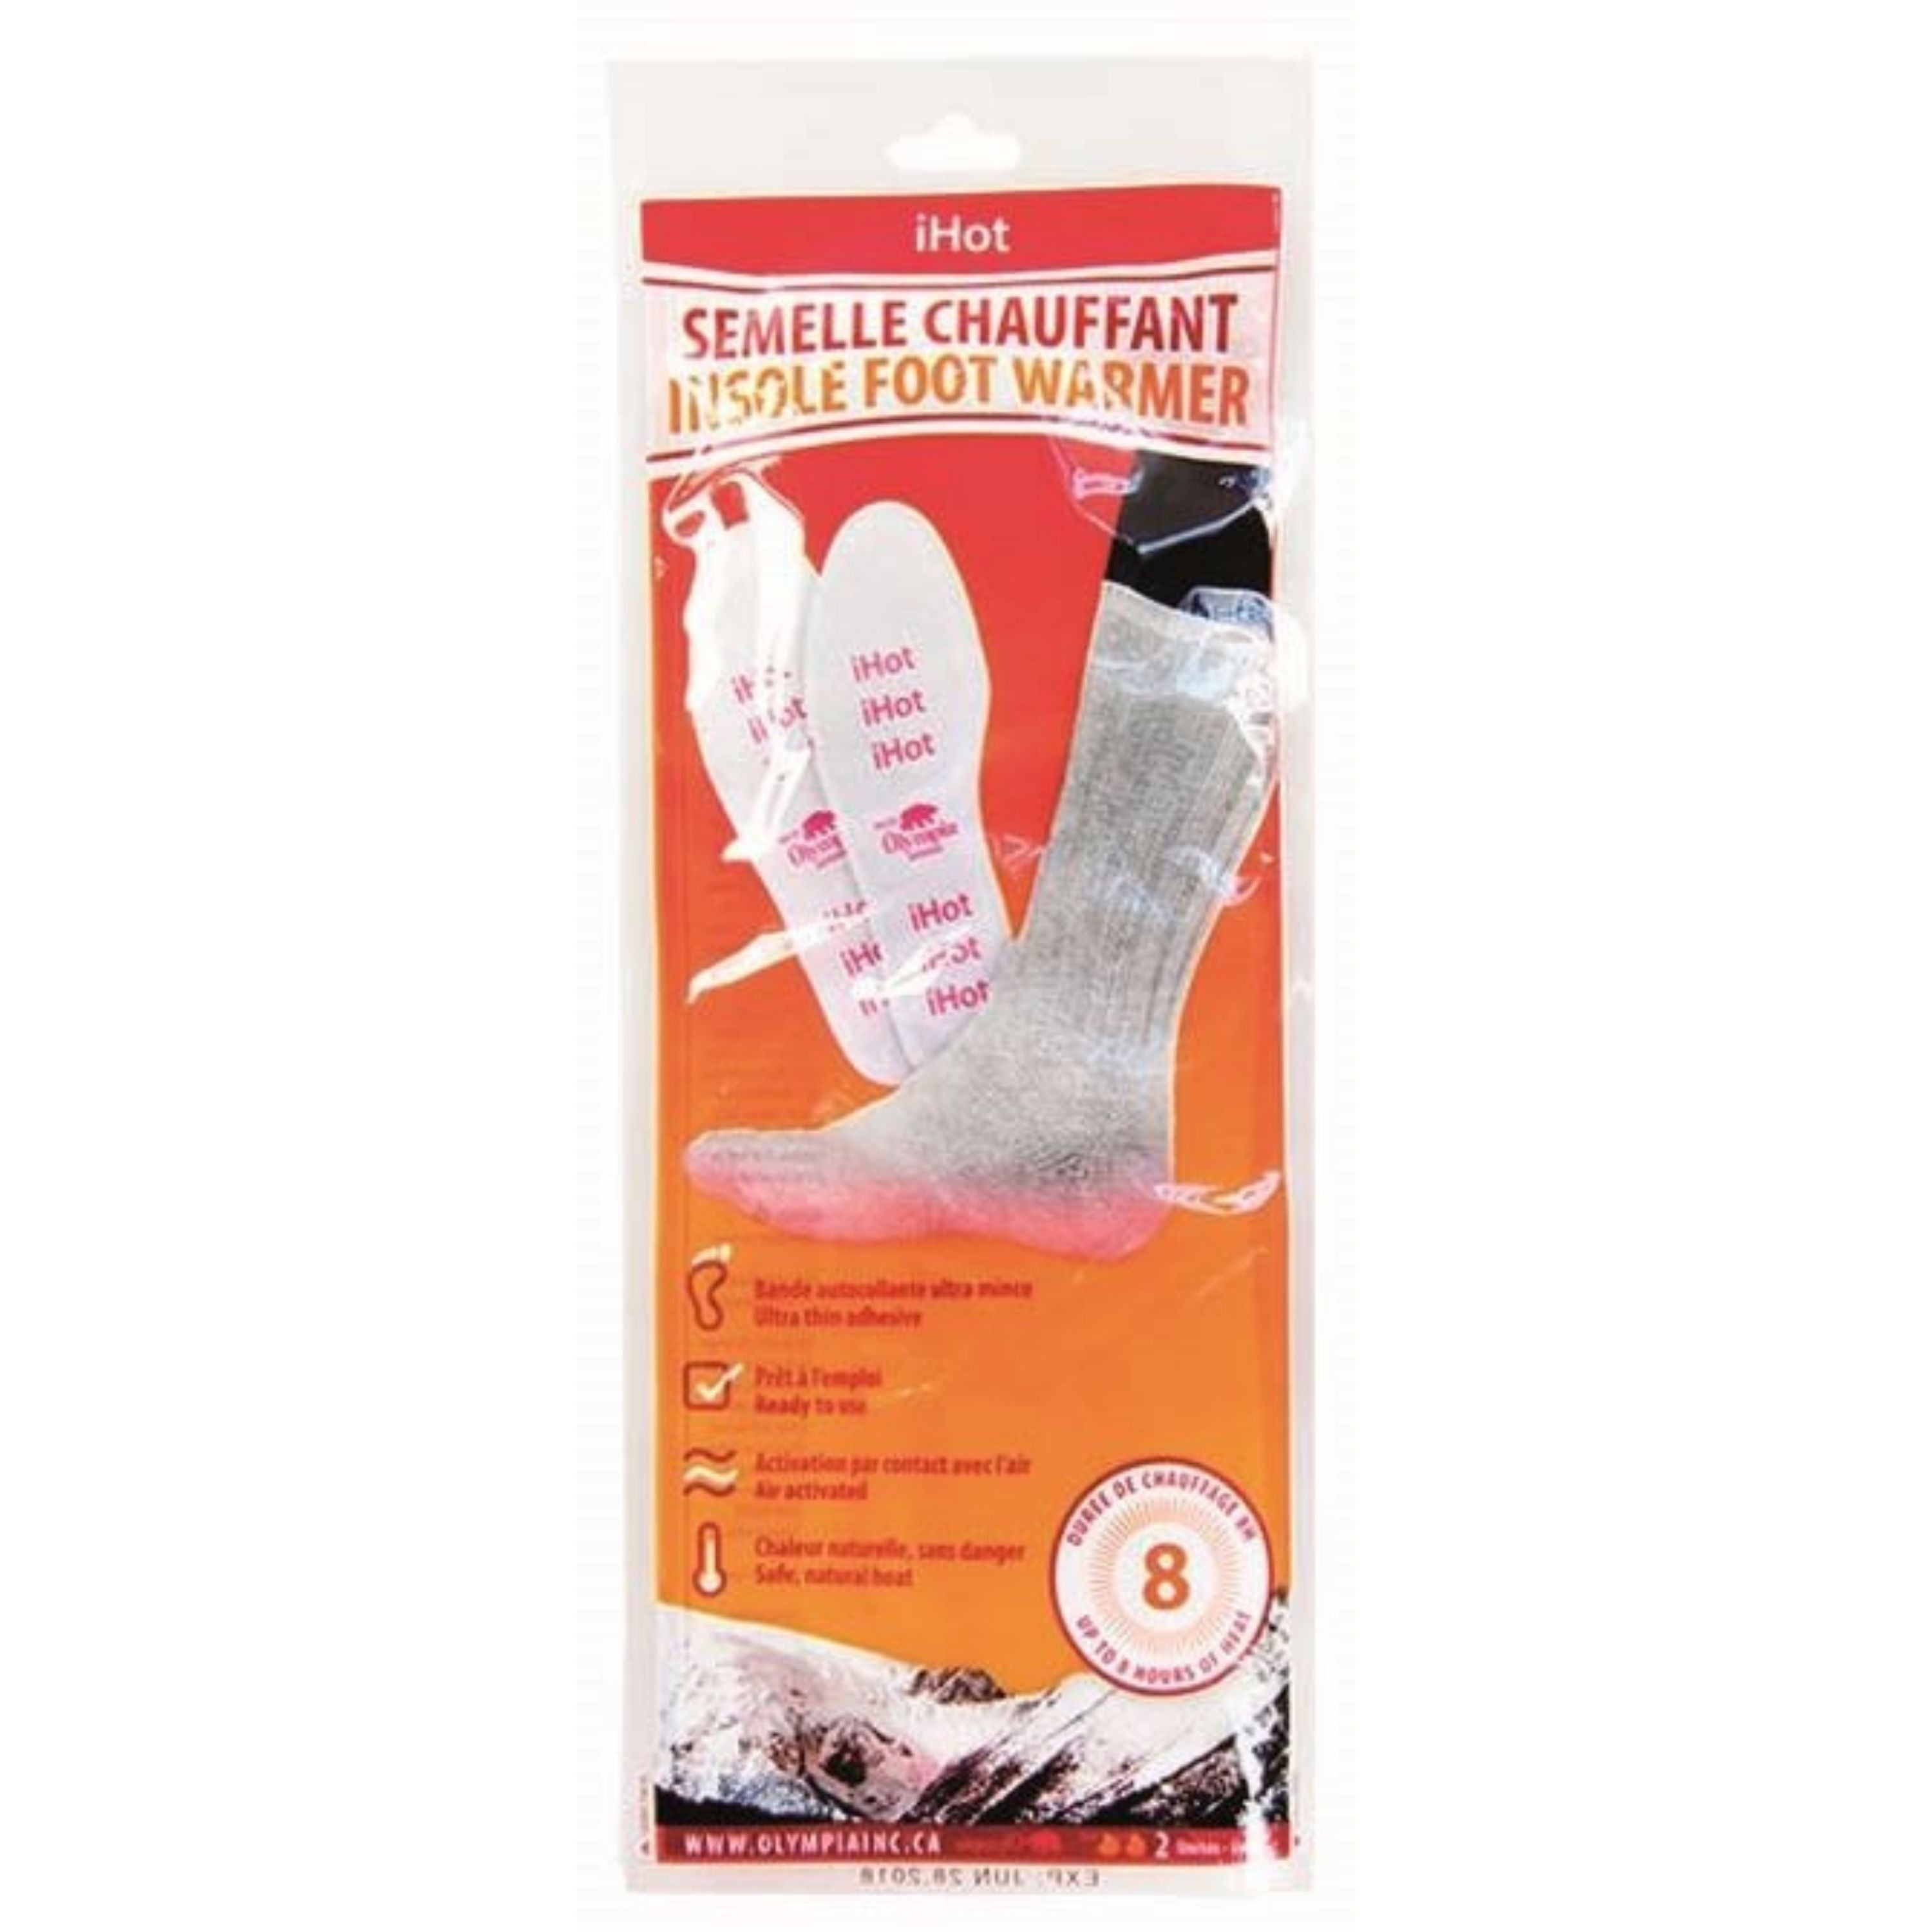 "ihot" Insole foot warmers - 2 soles/pkg